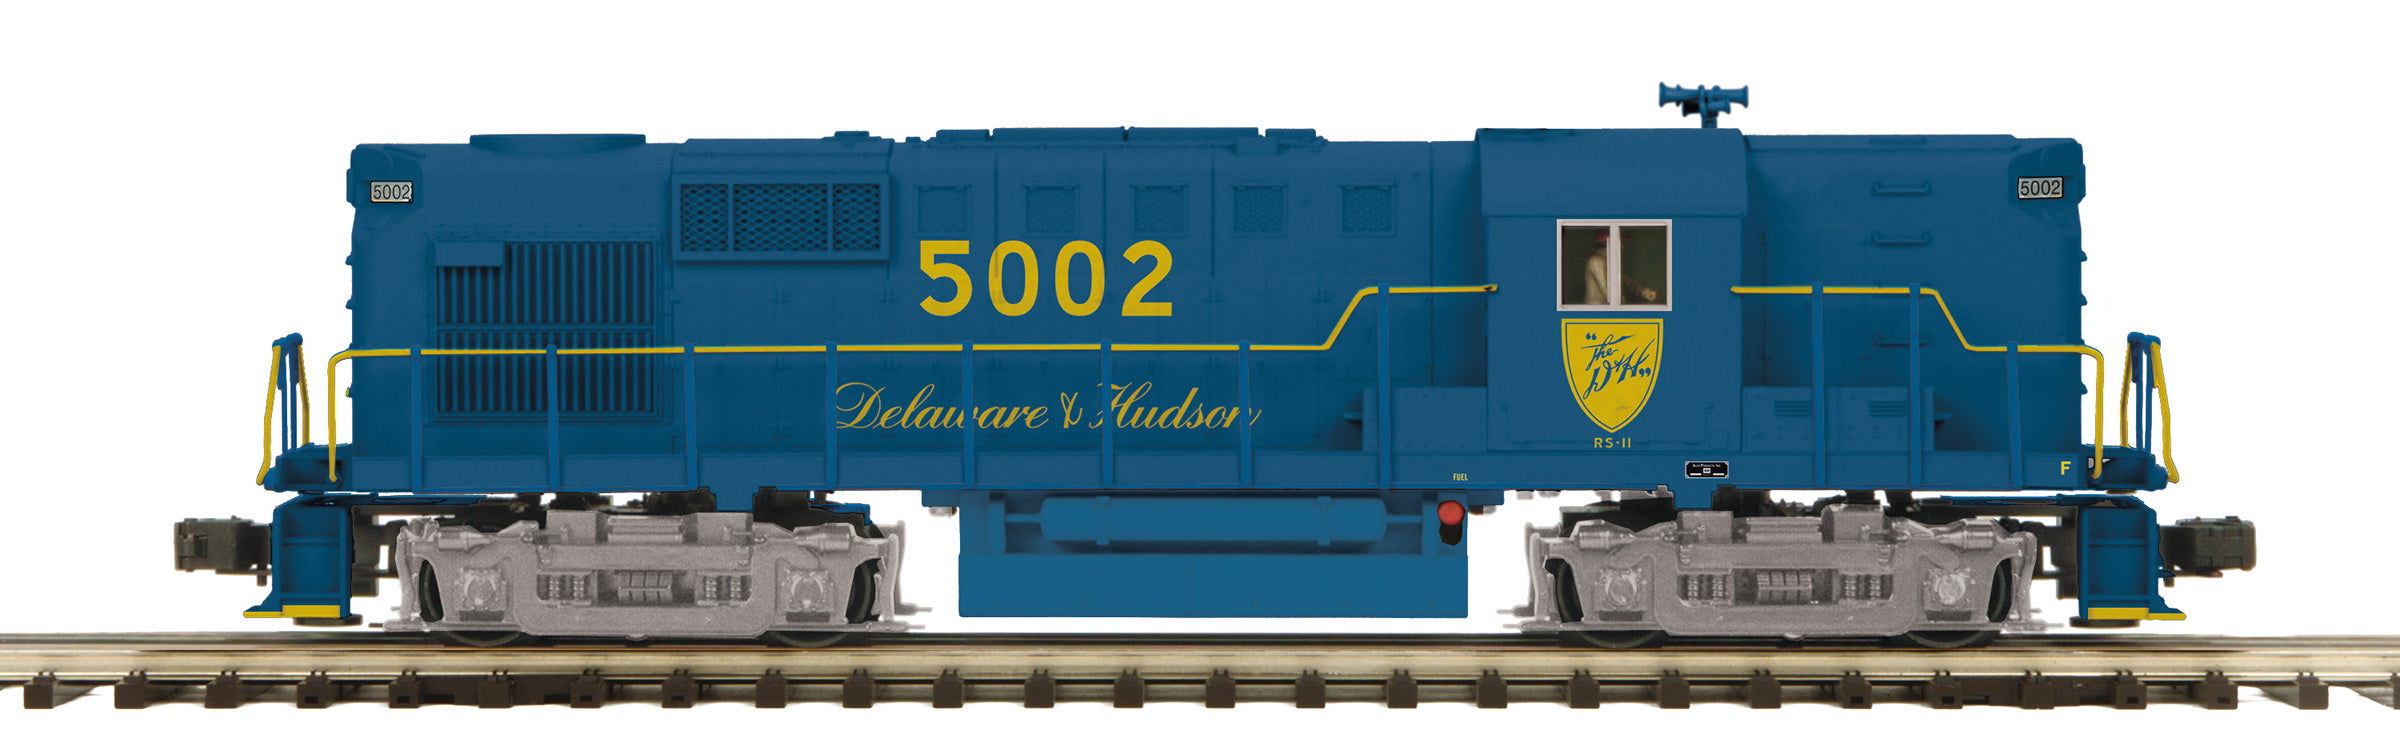 MTH 20-21642-1 - ALCo RS-11 Diesel Engine "Delaware & Hudson" #5002 w/ PS3 - Custom Run for MrMuffin'sTrains